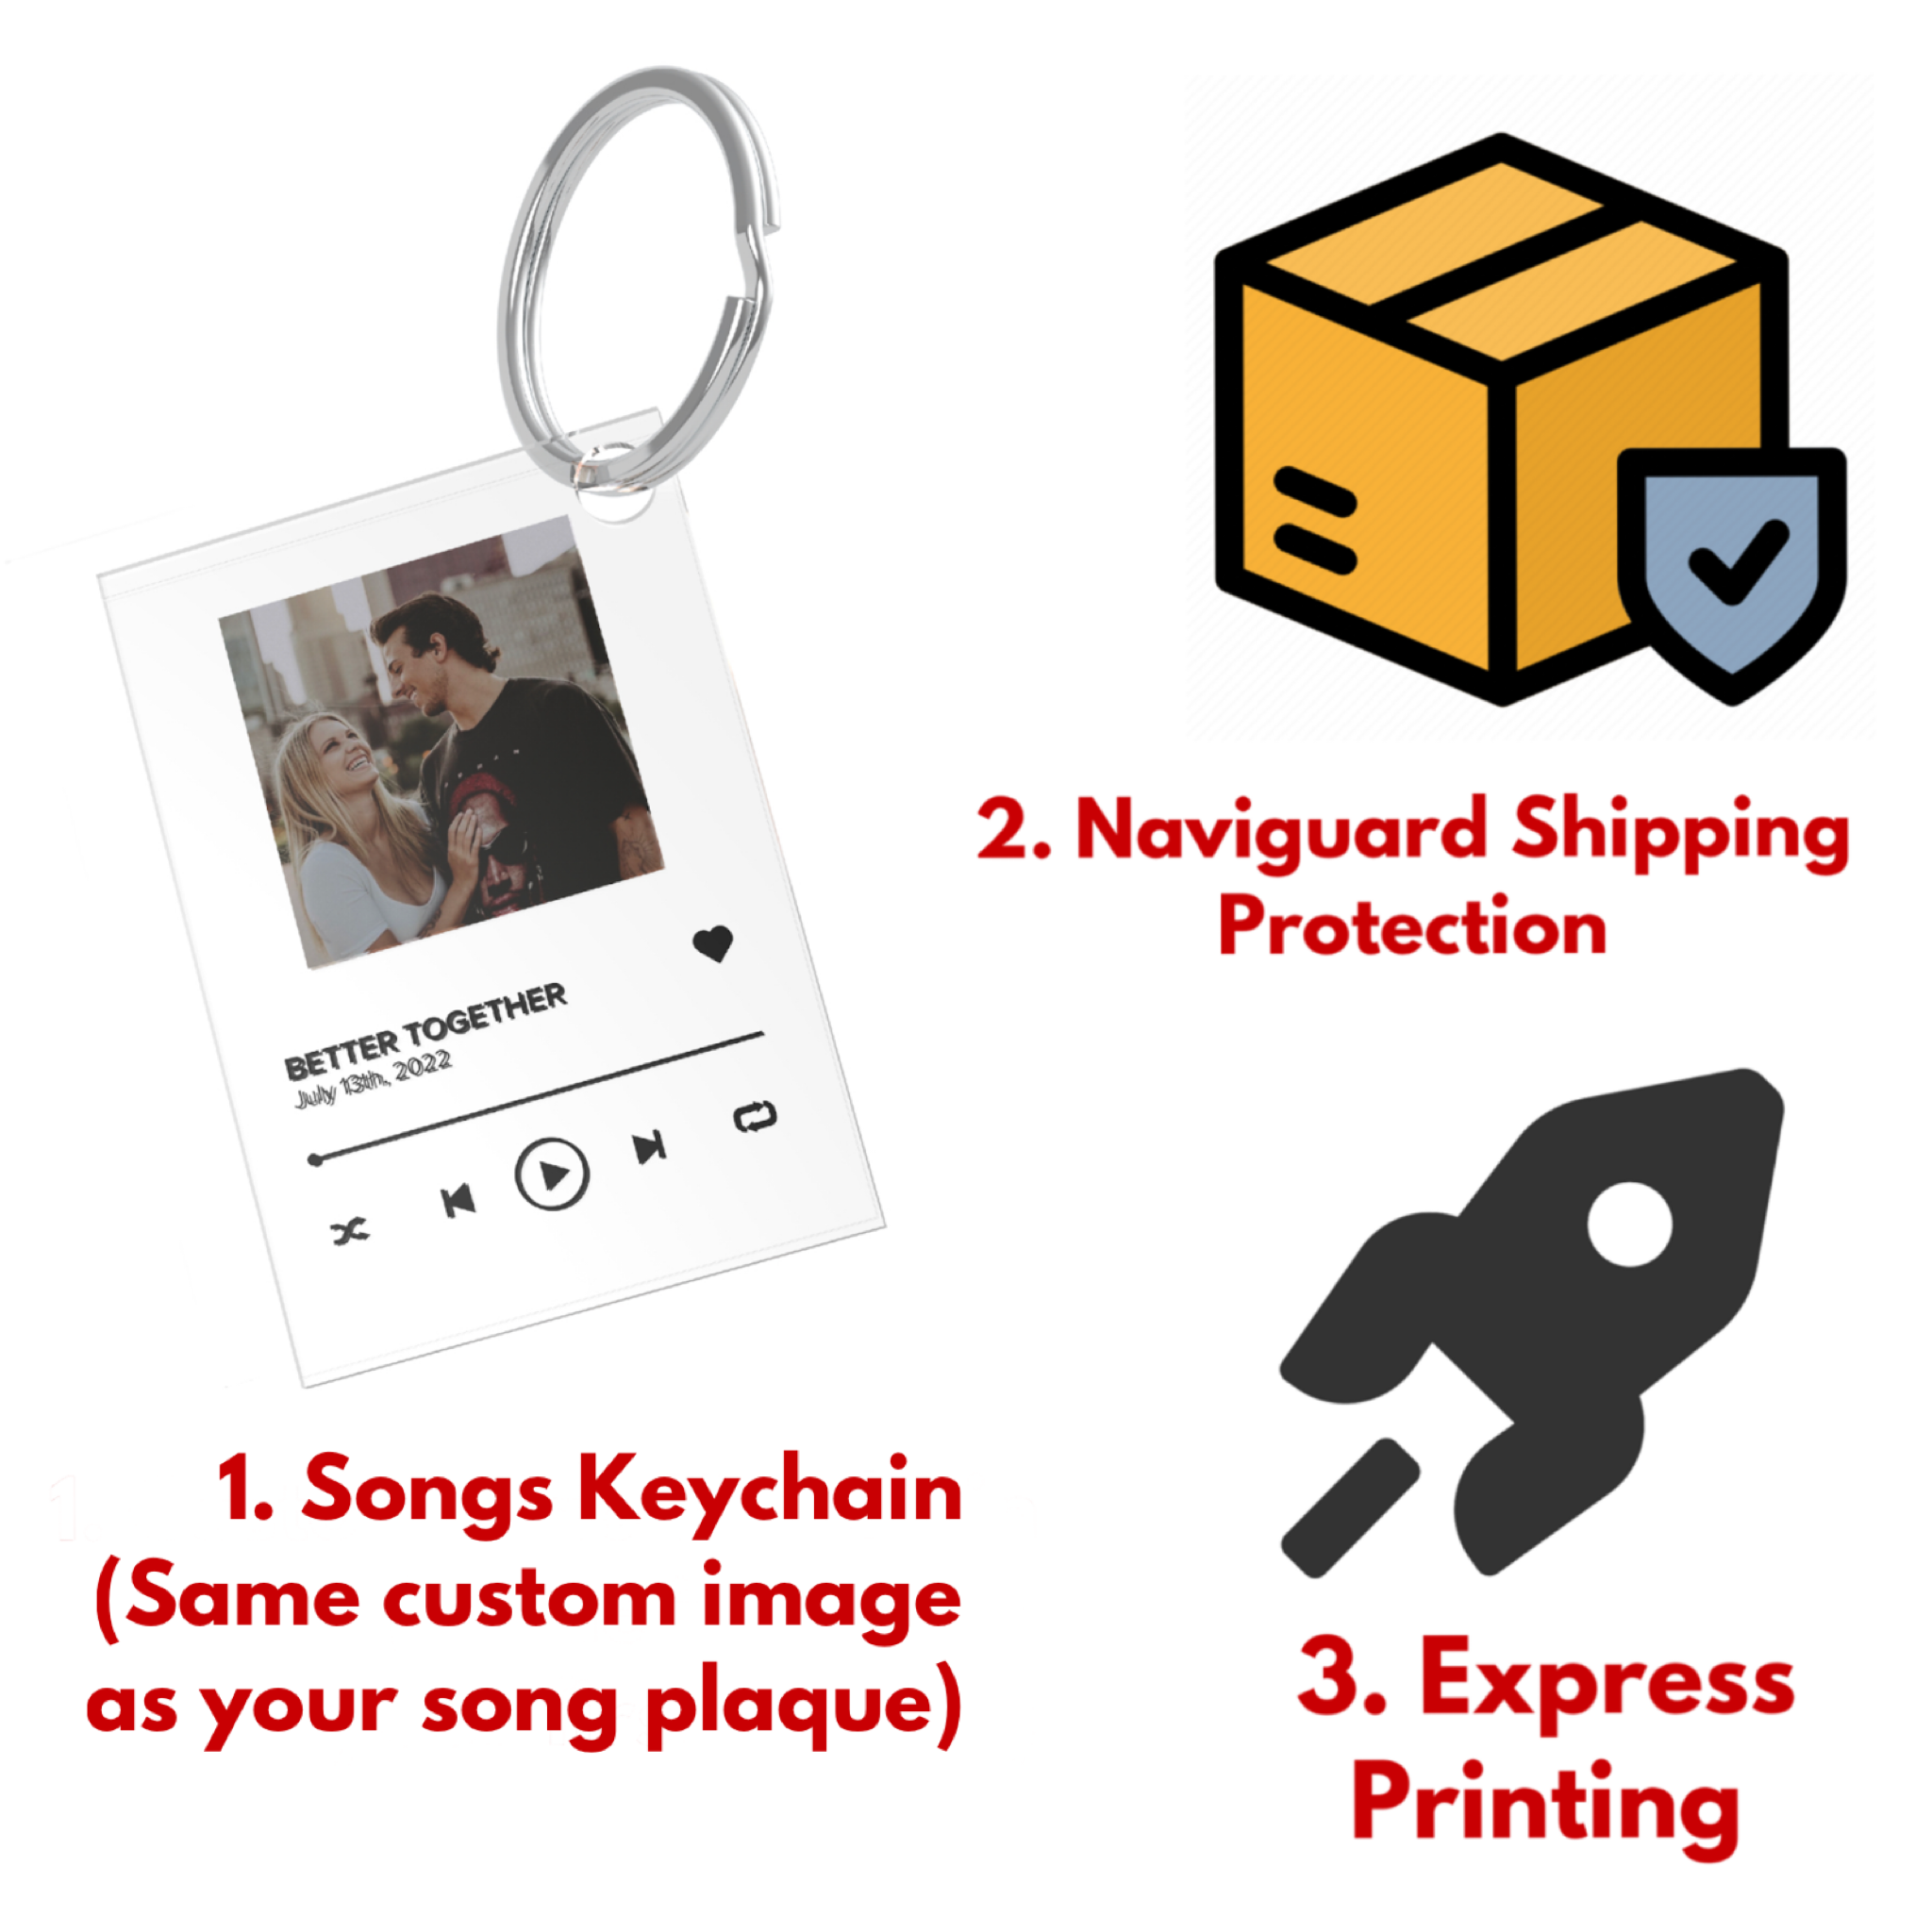 BUNDLE: Keychain + Naviguard Shipping Protection + Express Printing